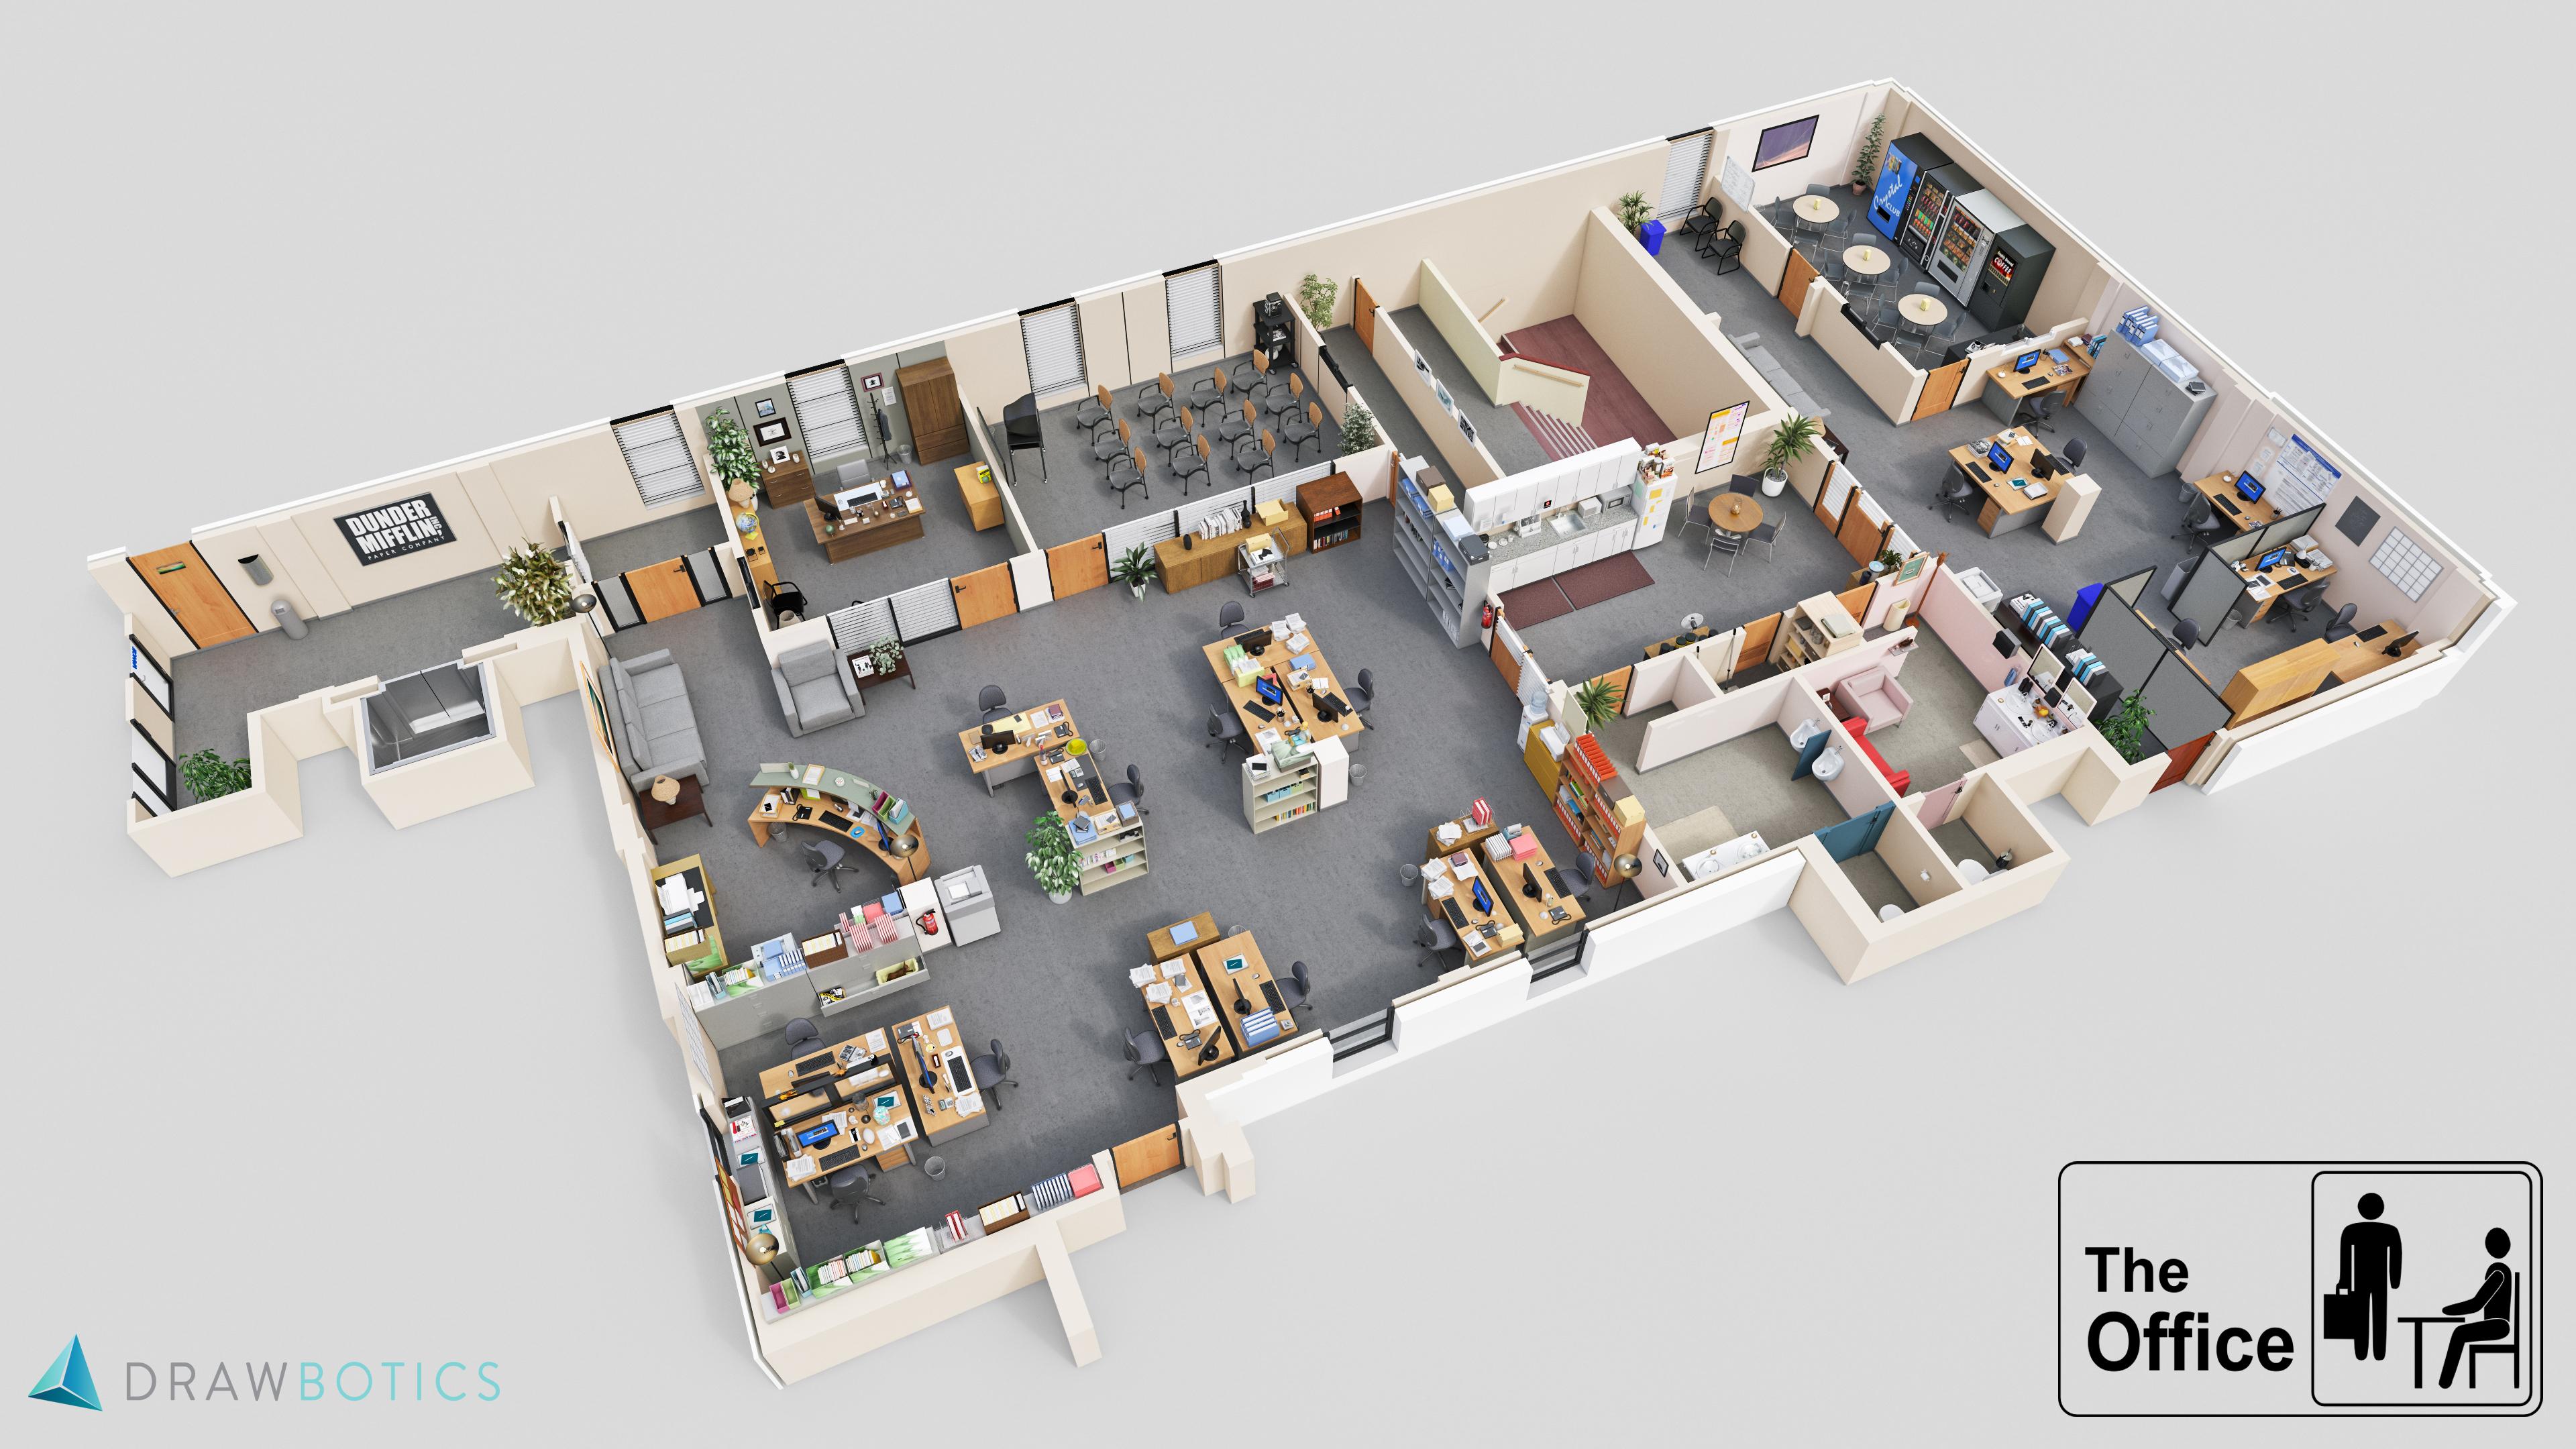 General 3840x2160 The Office artwork digital art office interior design Architecture models CGI